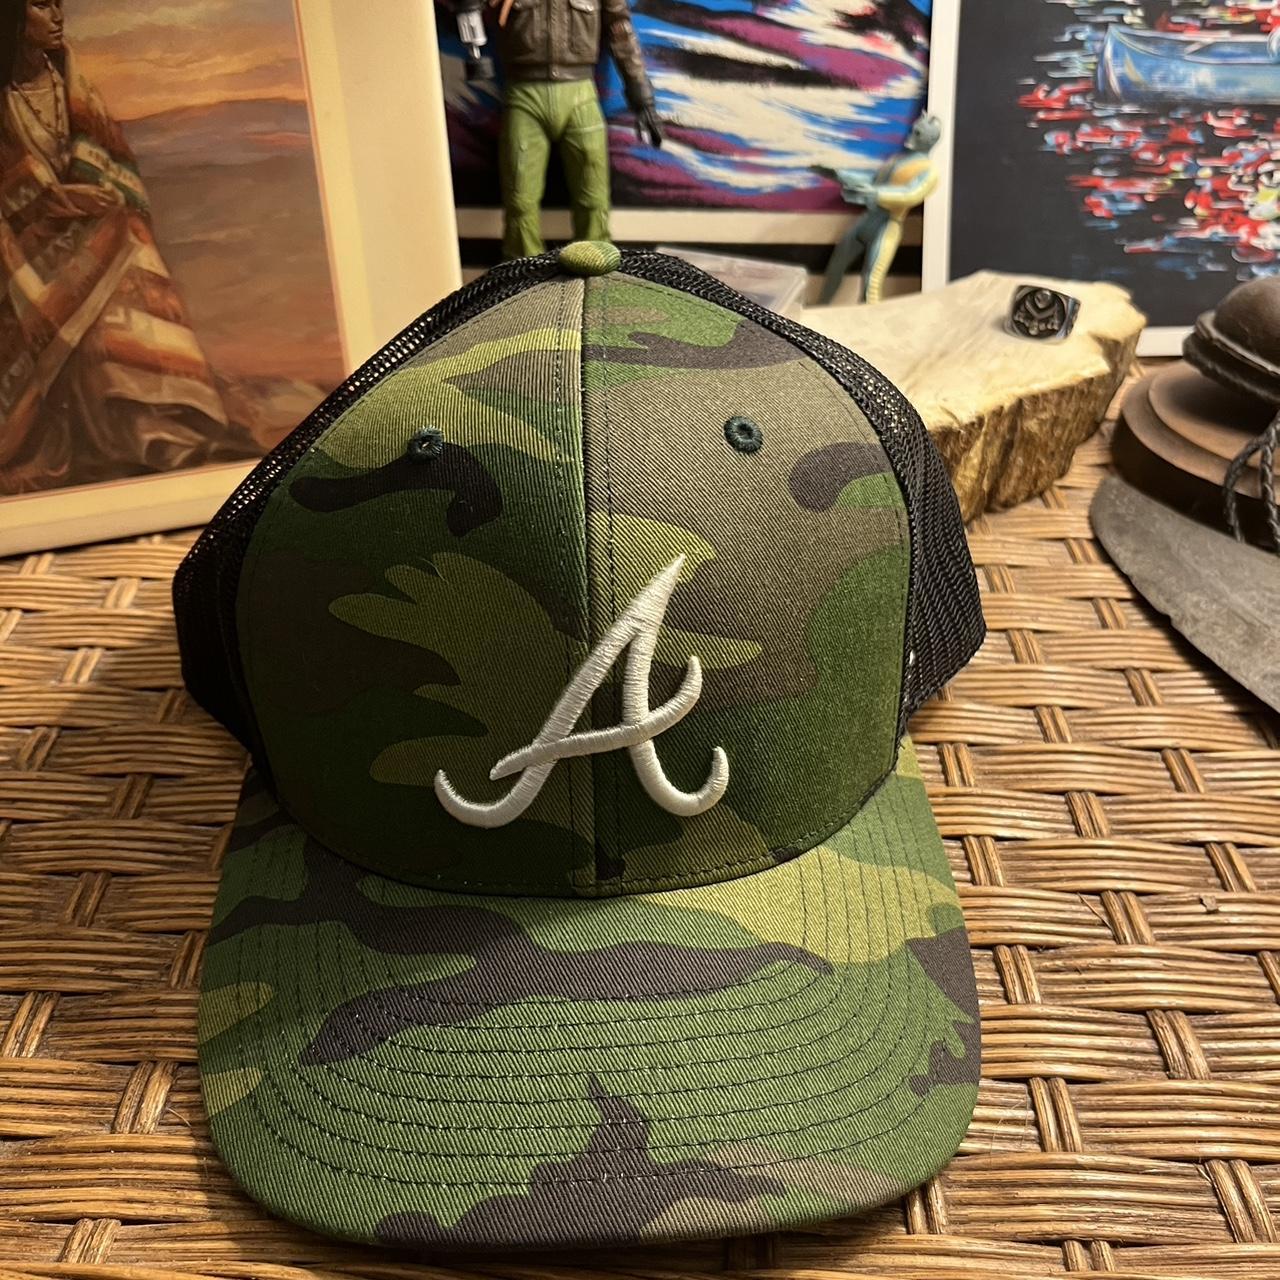 Atlanta Braves camo hat, this hat is basically brand